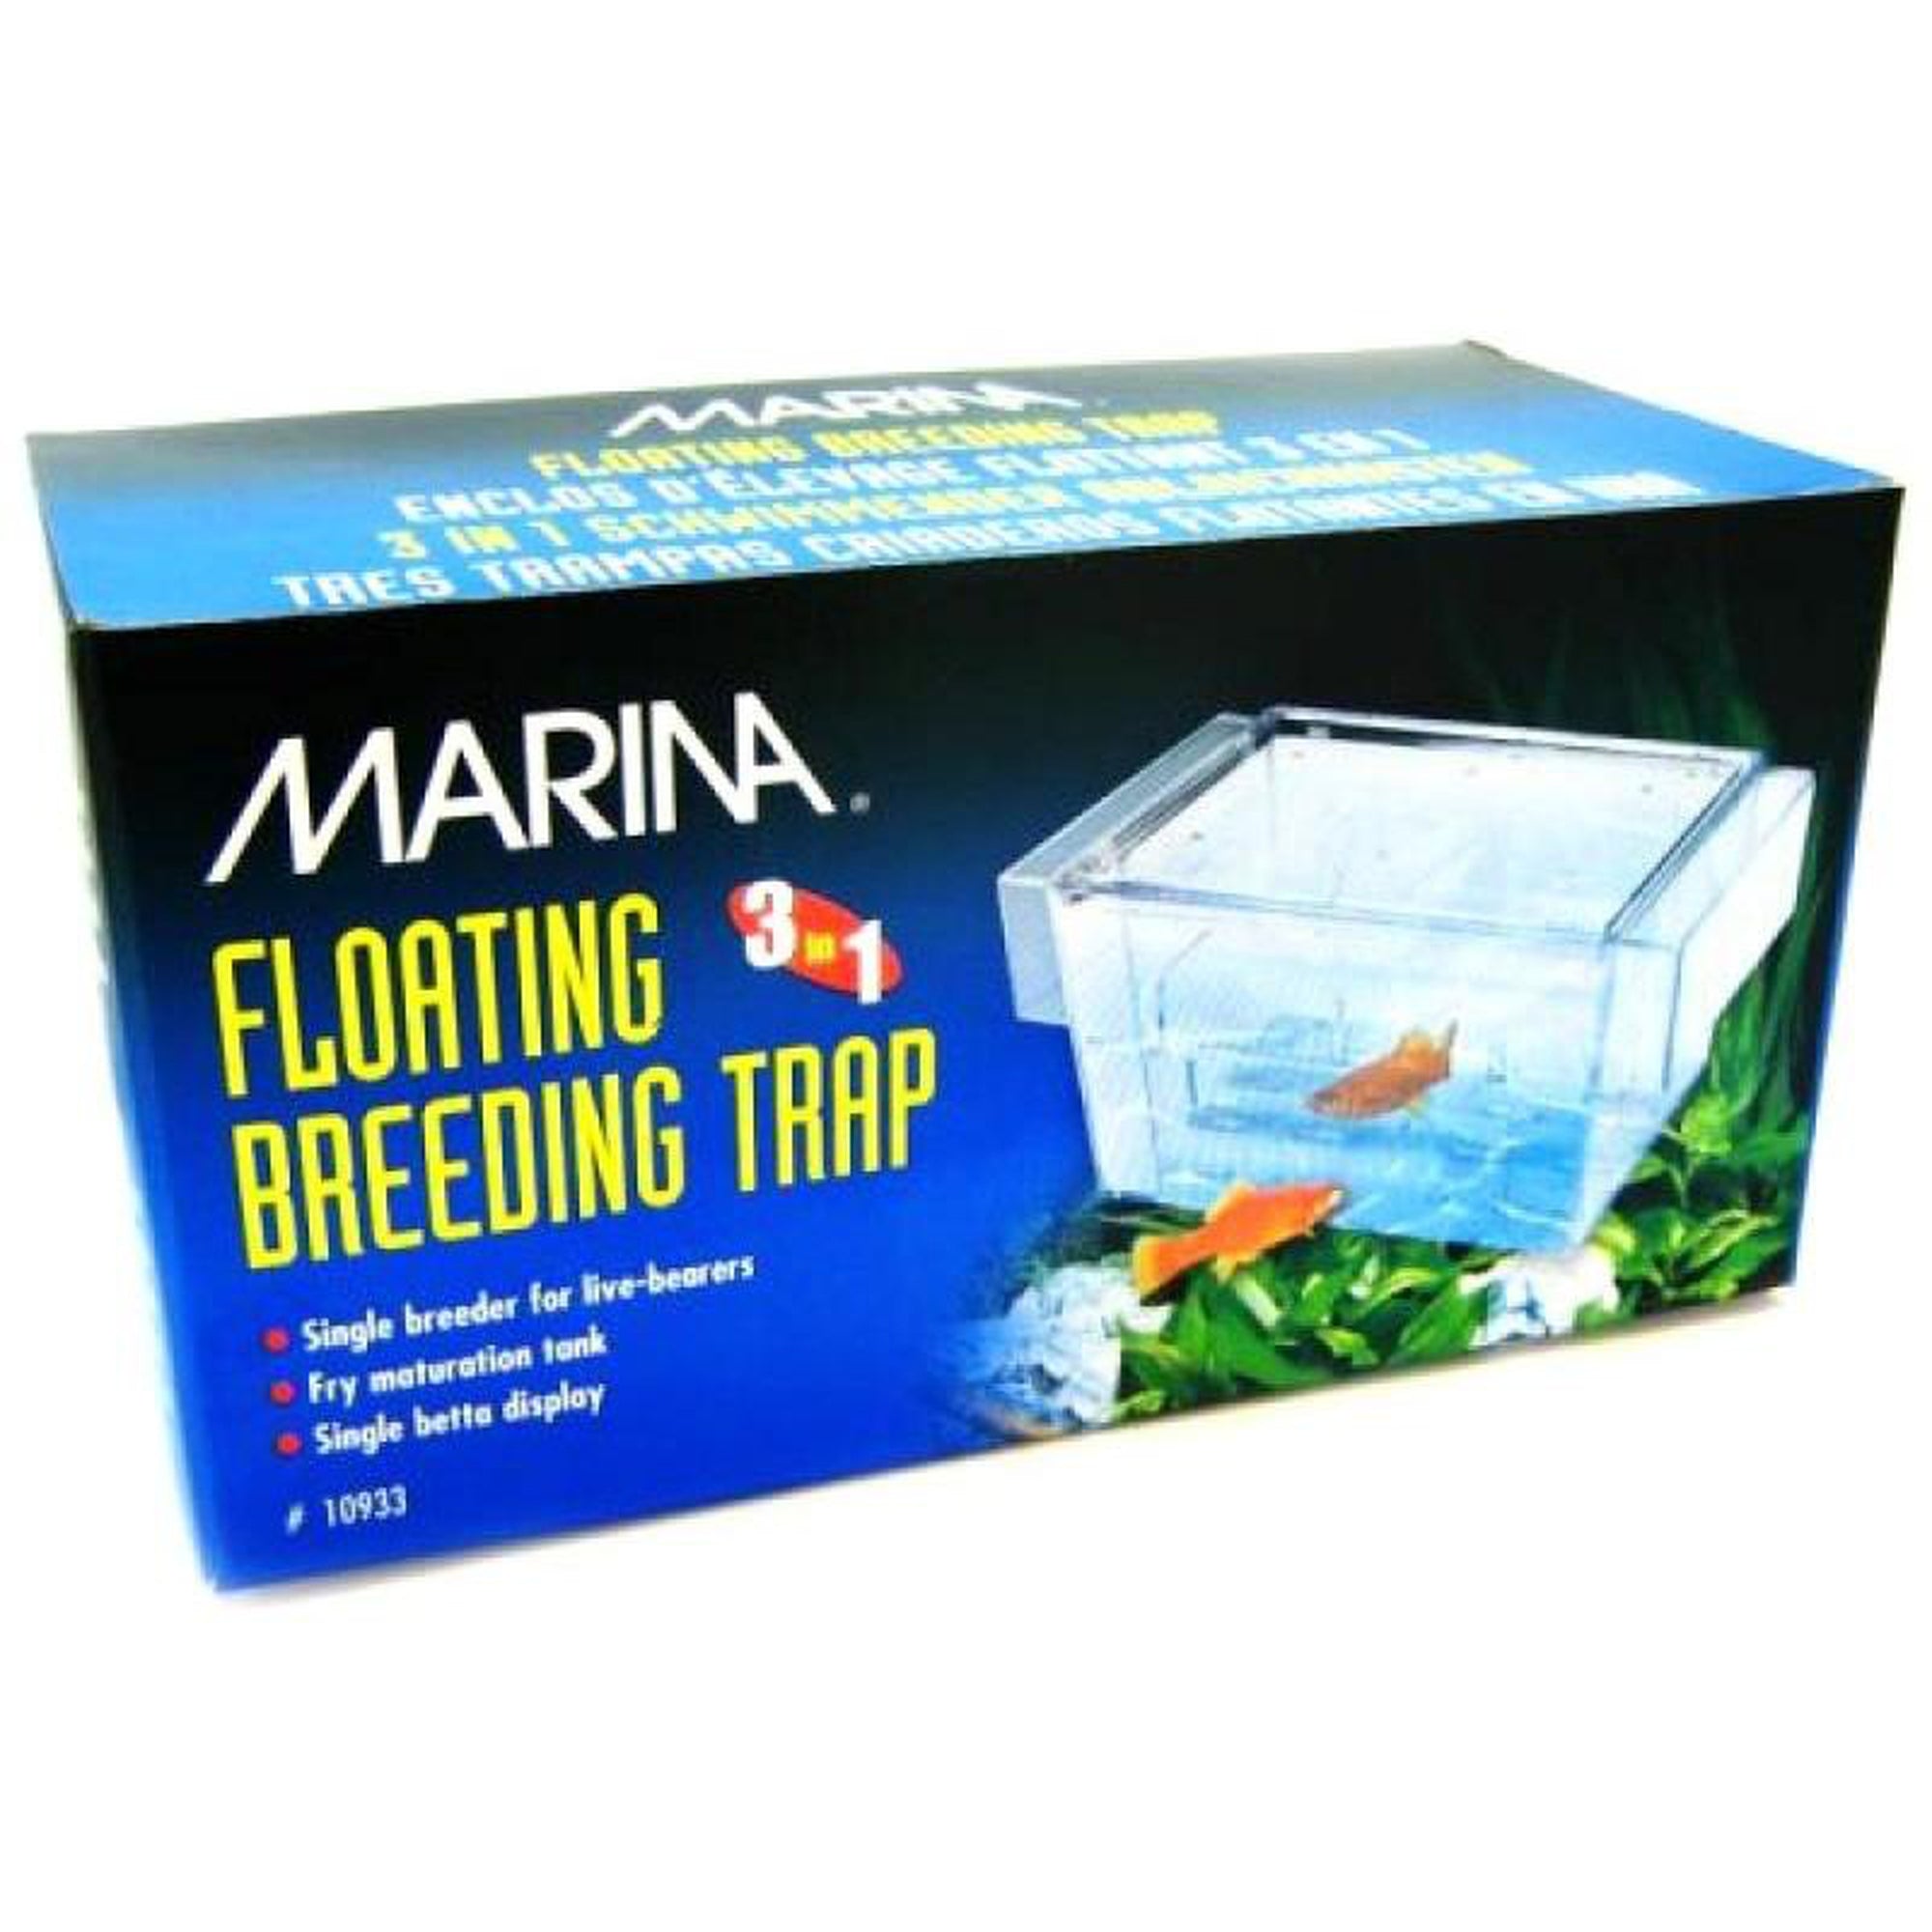 Marina 3 in 1 Floating Breeding Trap